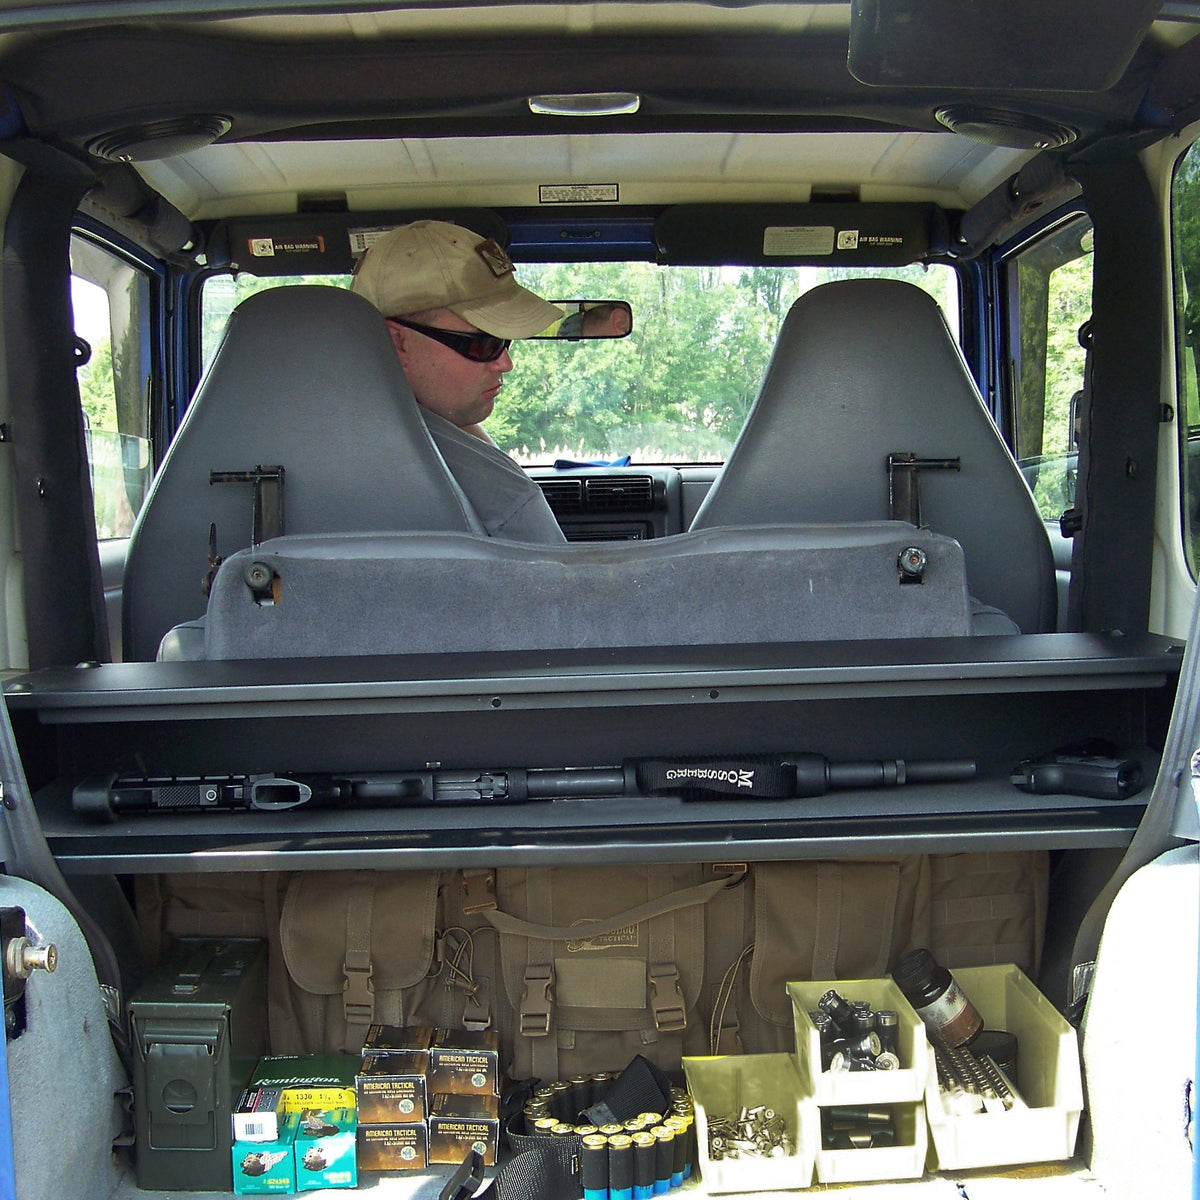 SecureIt Fast Box Model 47 Hidden Gun Safe FB-47-01 Installed in back of vehicle